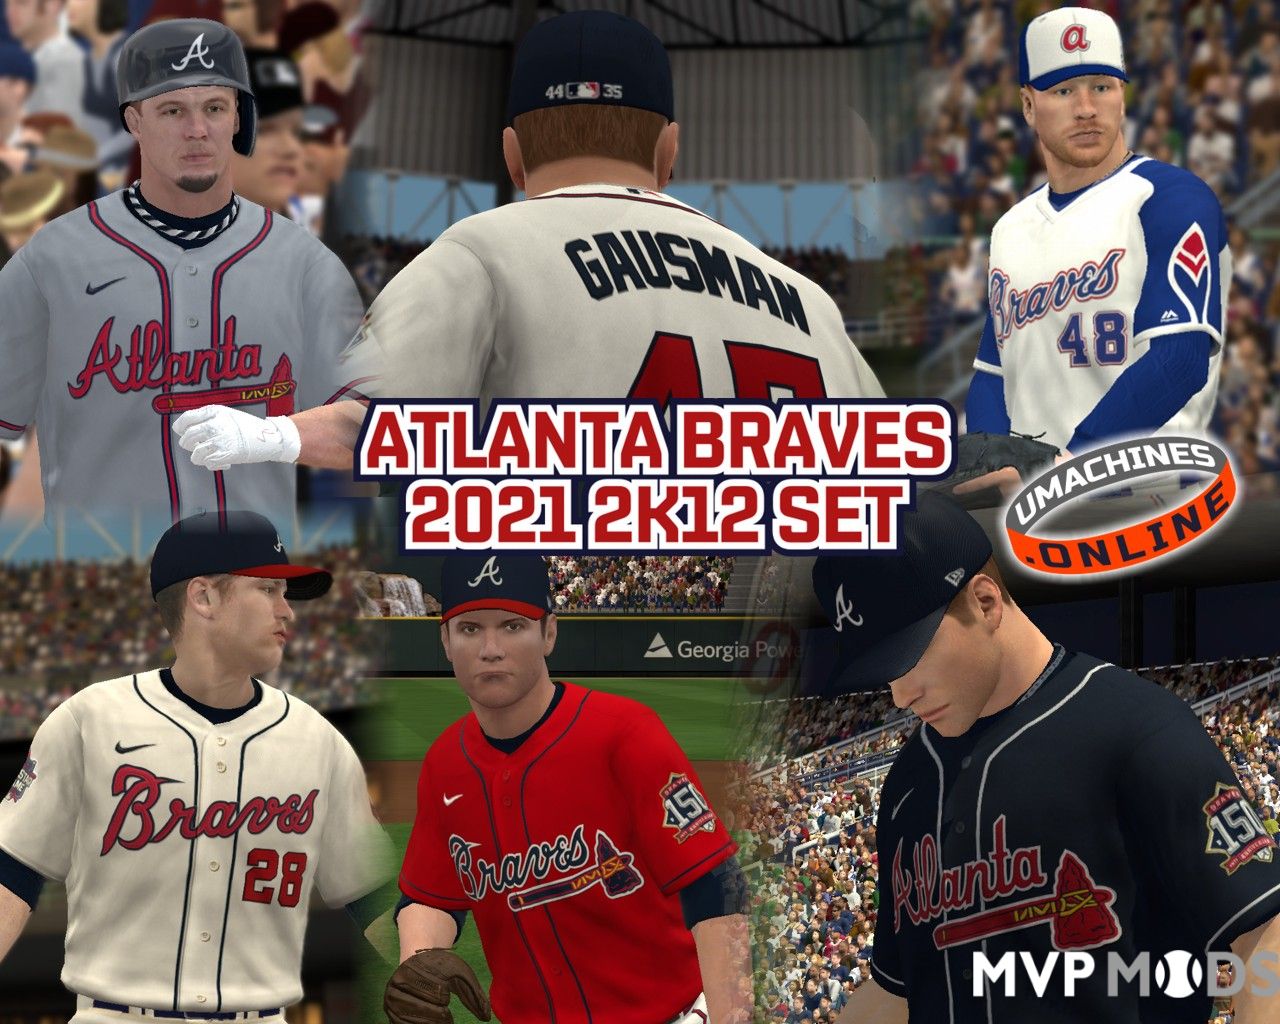 Atlanta Braves 2012 Uniforms, Uniforms for the 2012 Season